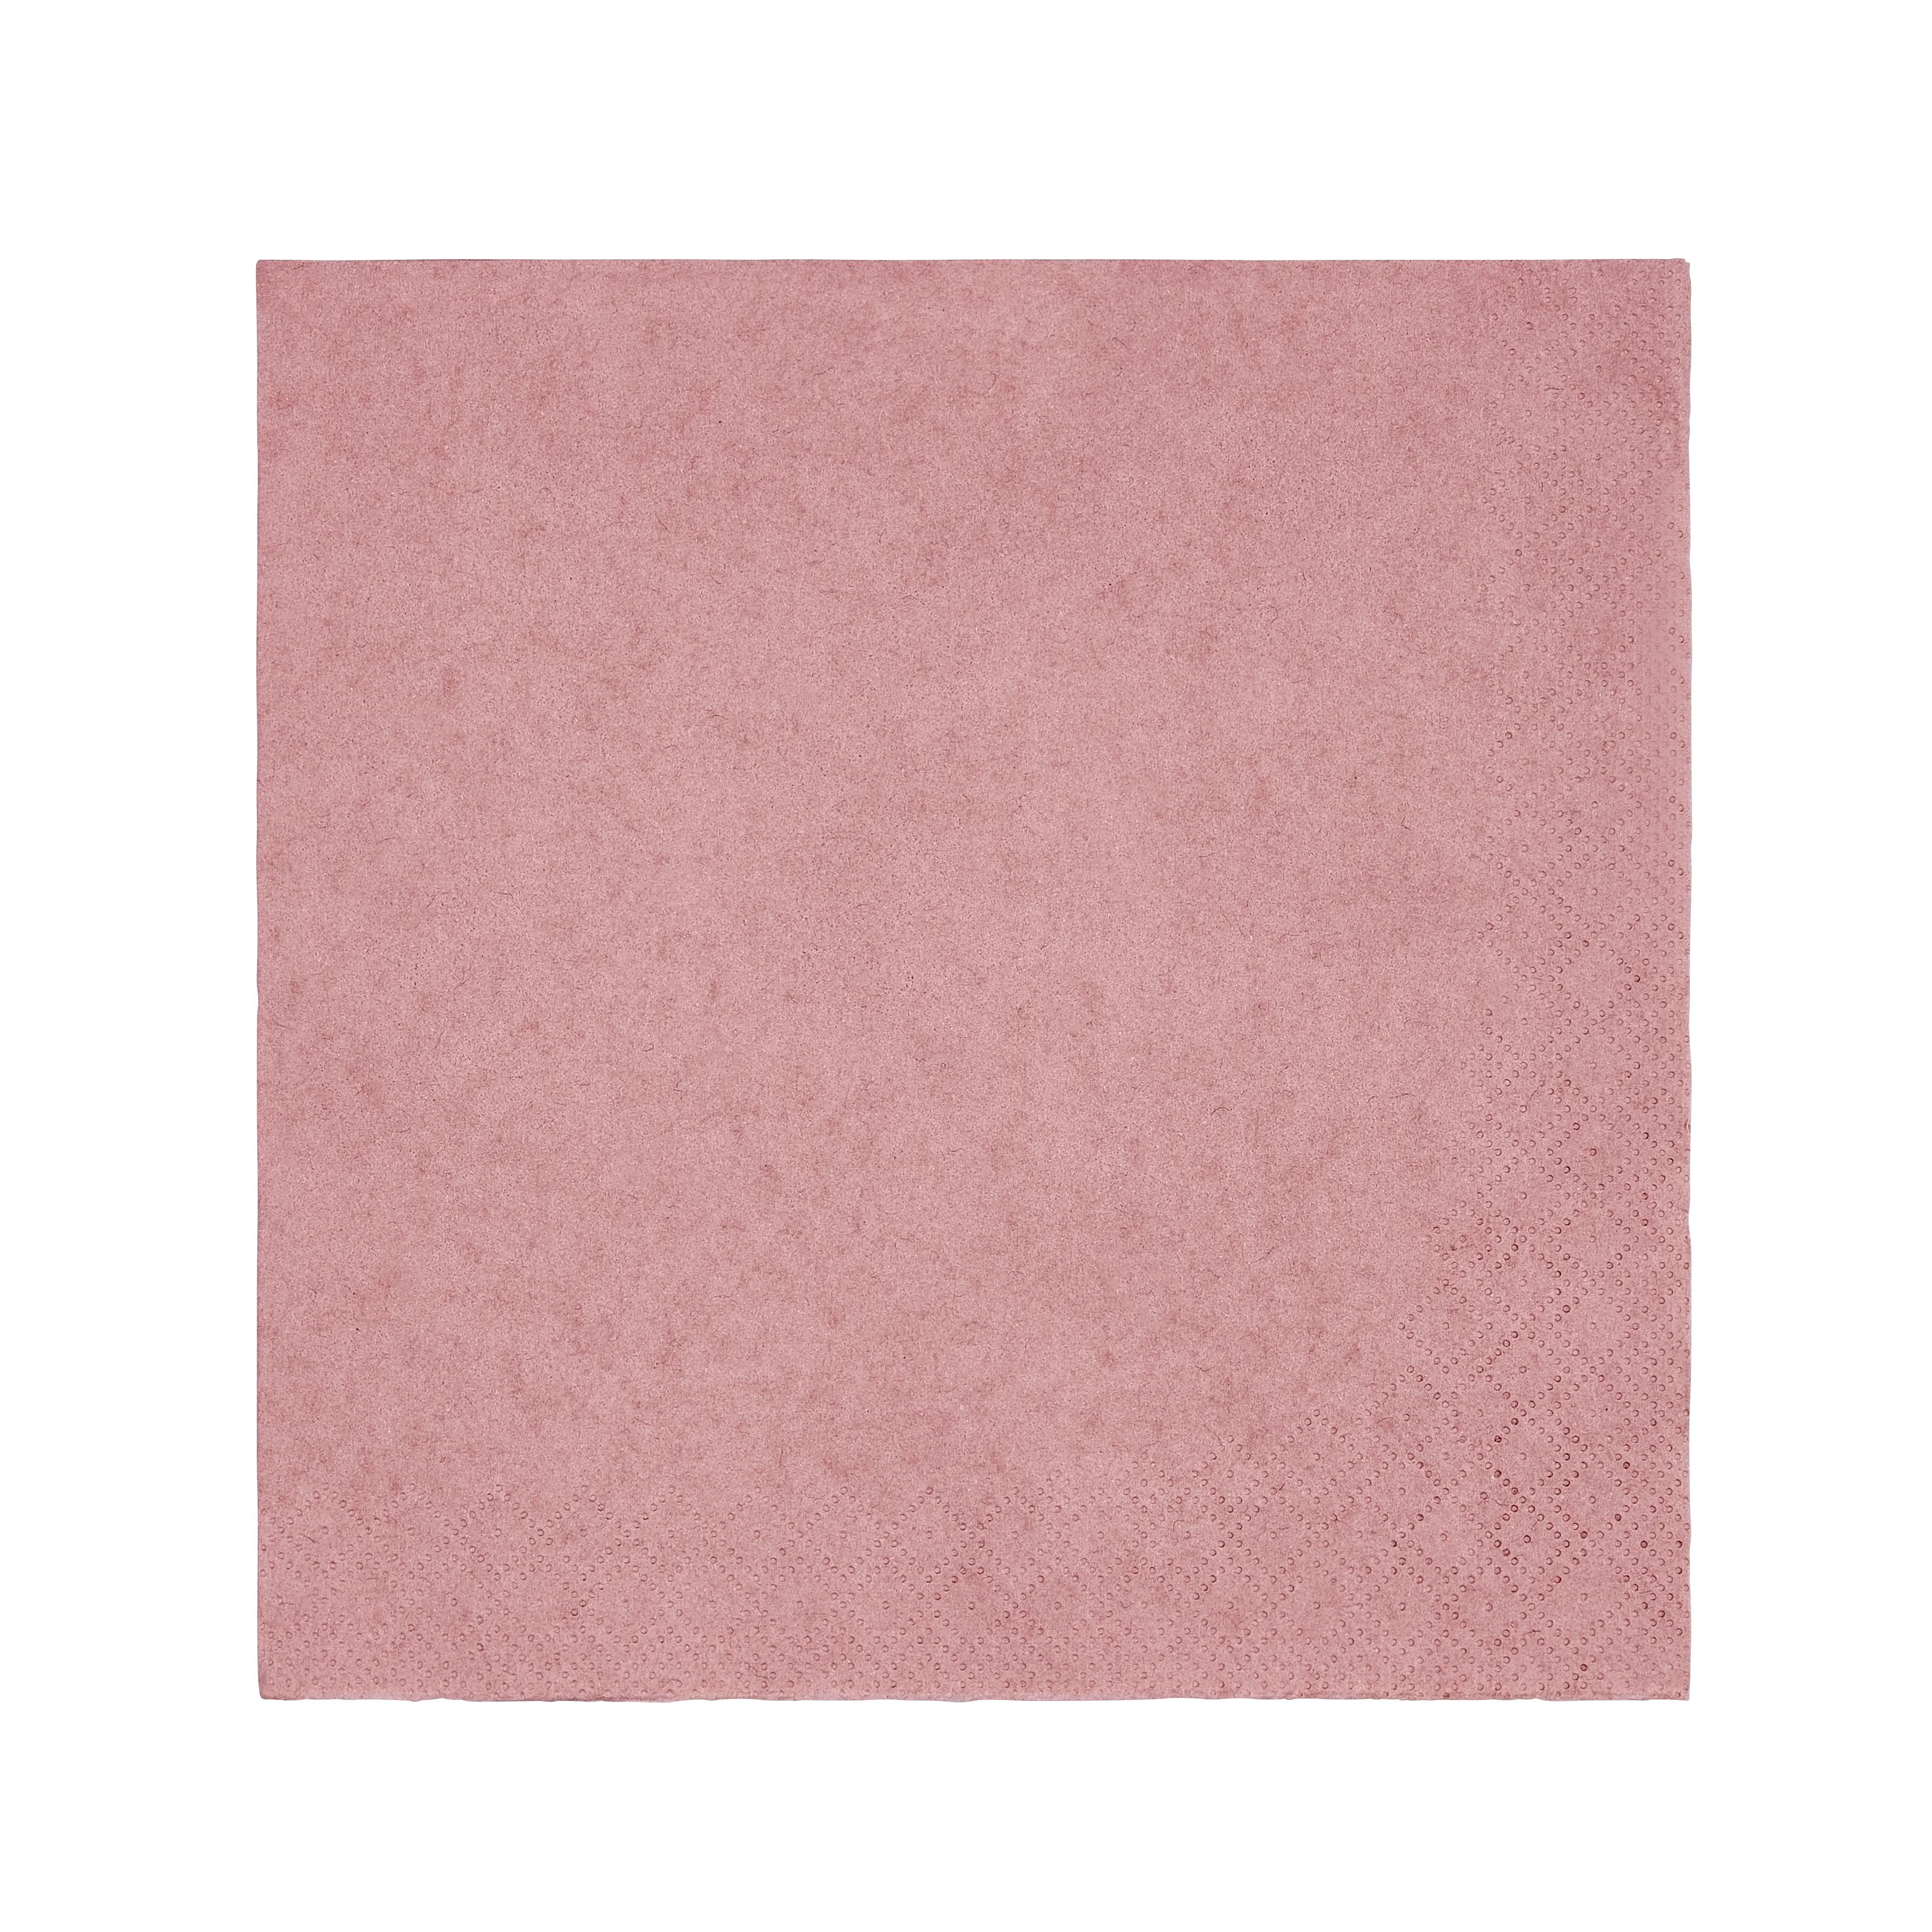 Serviette Lavenia Einfarbig Rosa 50 Stk, 33x33 cm - Rosa, MODERN, Papier (33/33cm) - Luca Bessoni